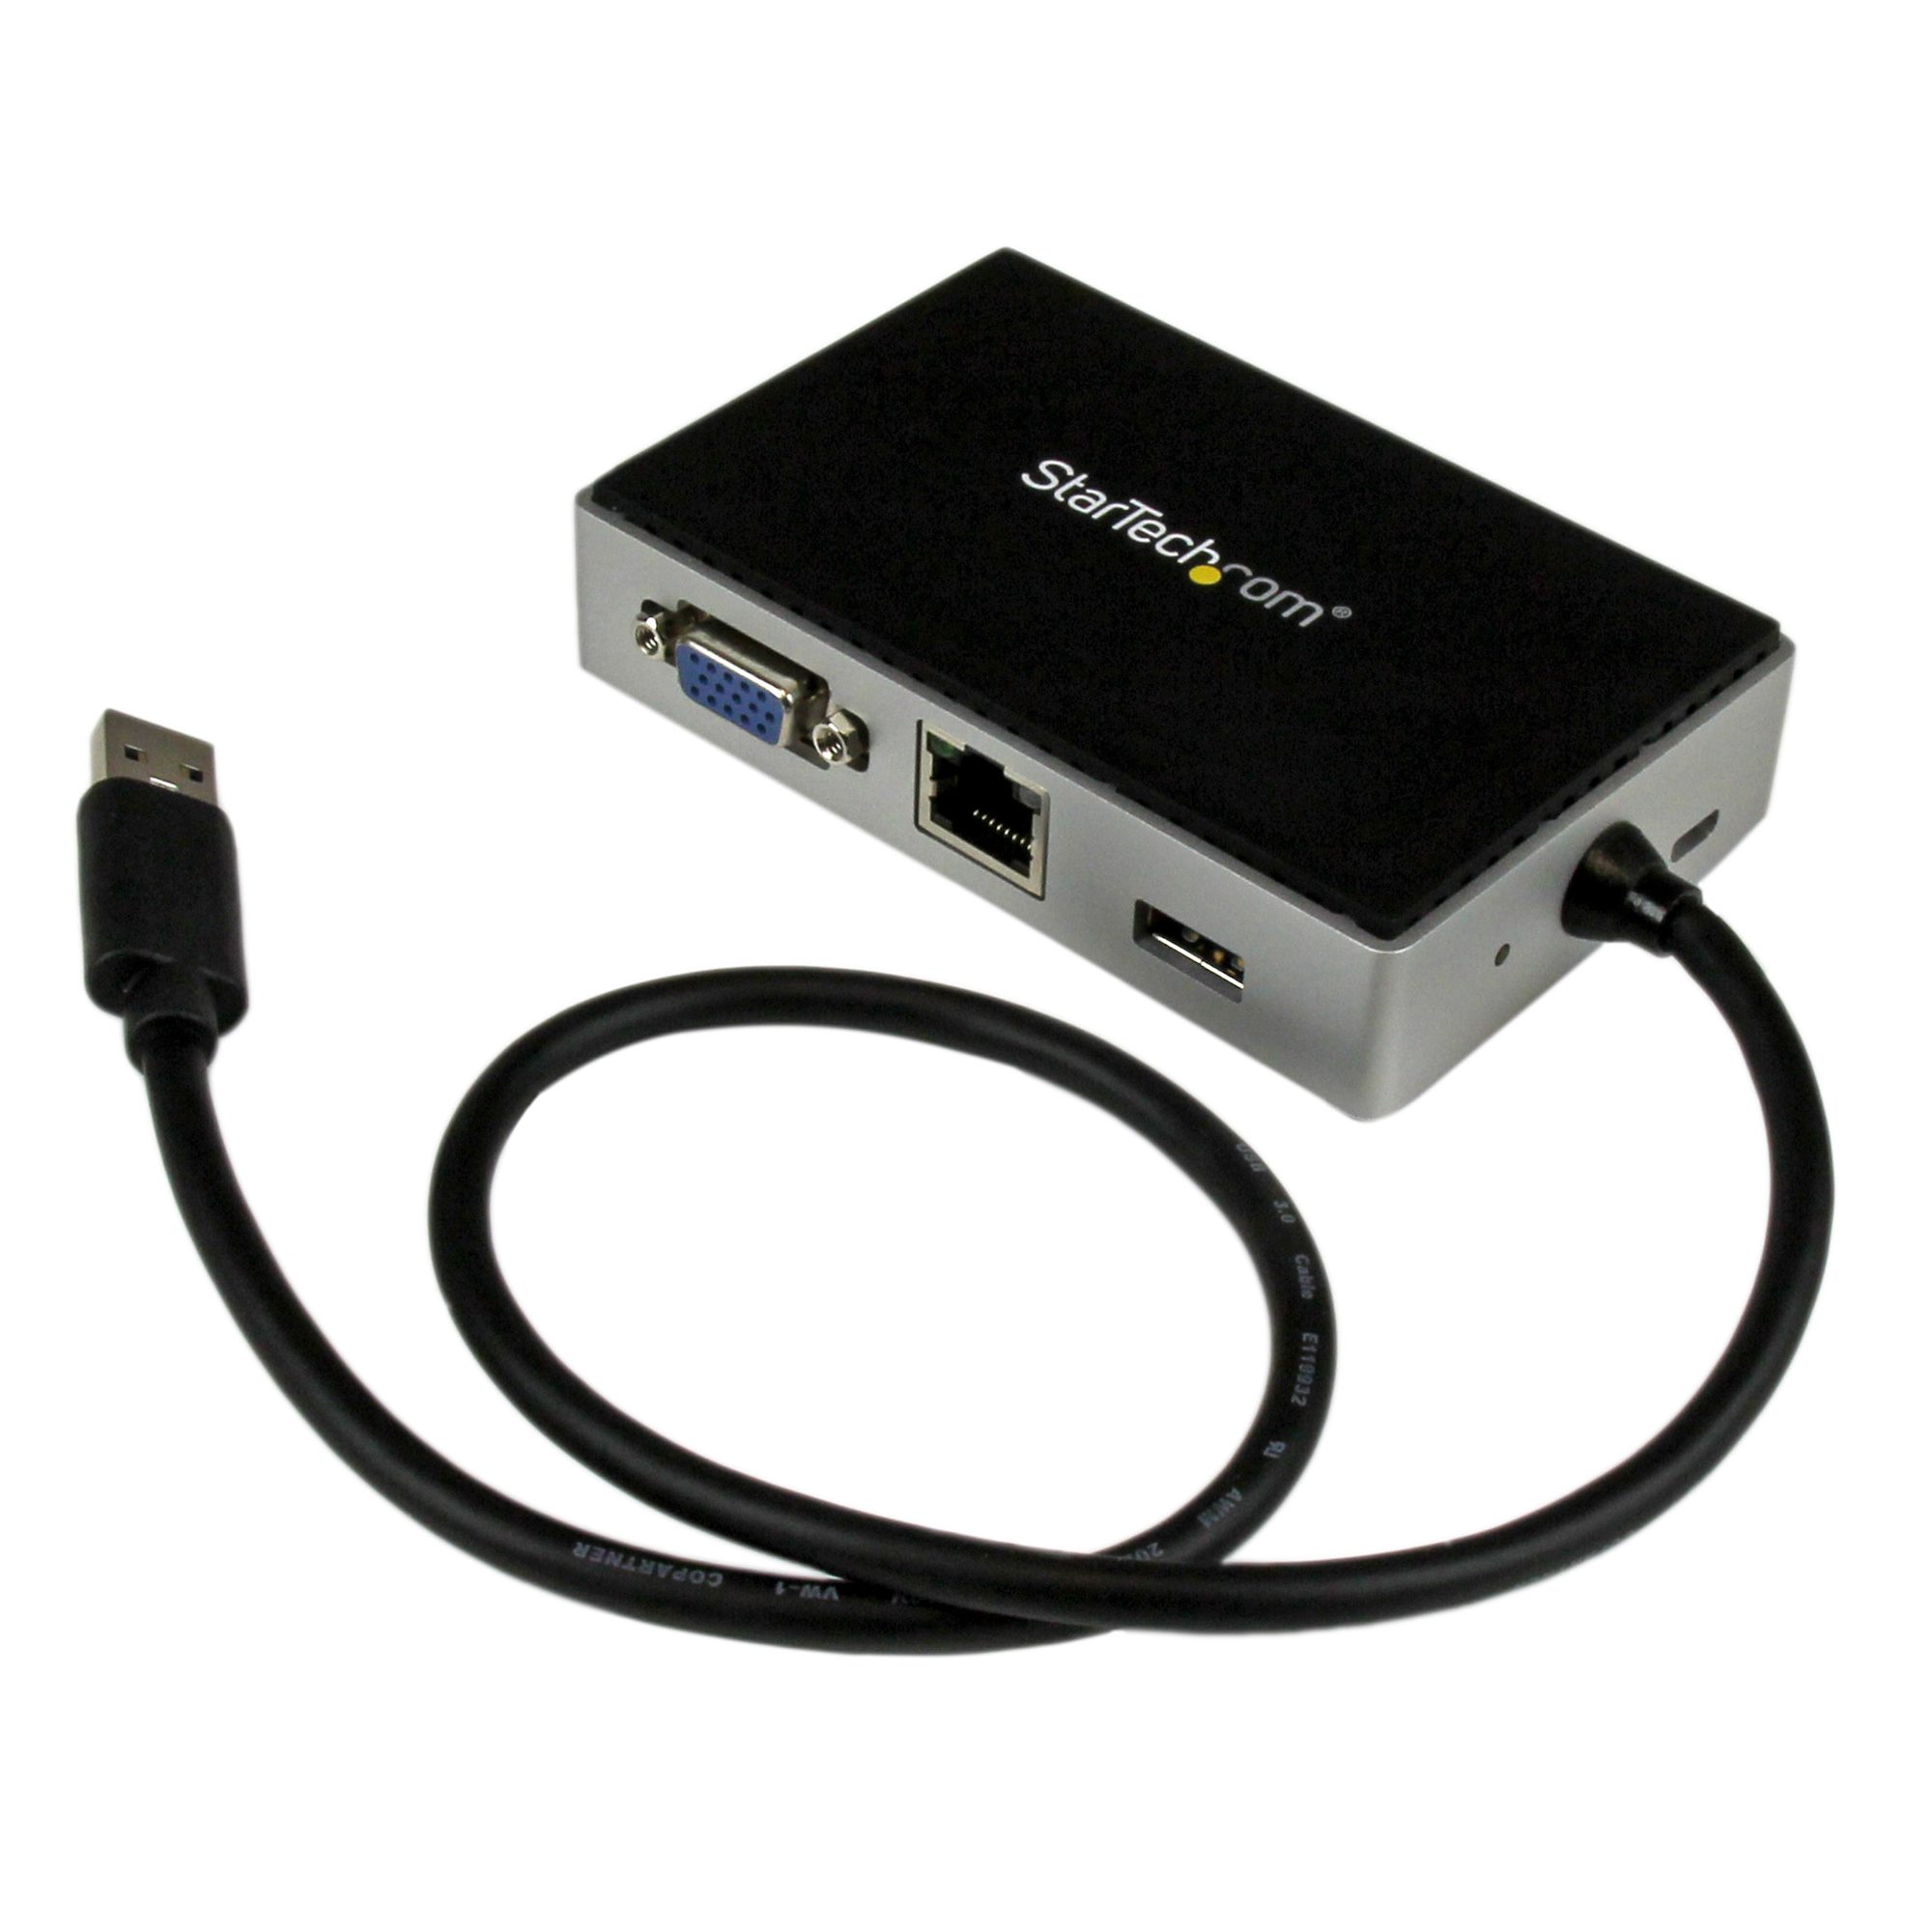 Startech : STATION D ACCUEIL USB 3.0 PC PORTABLE 2 X DVI / USB / GBE